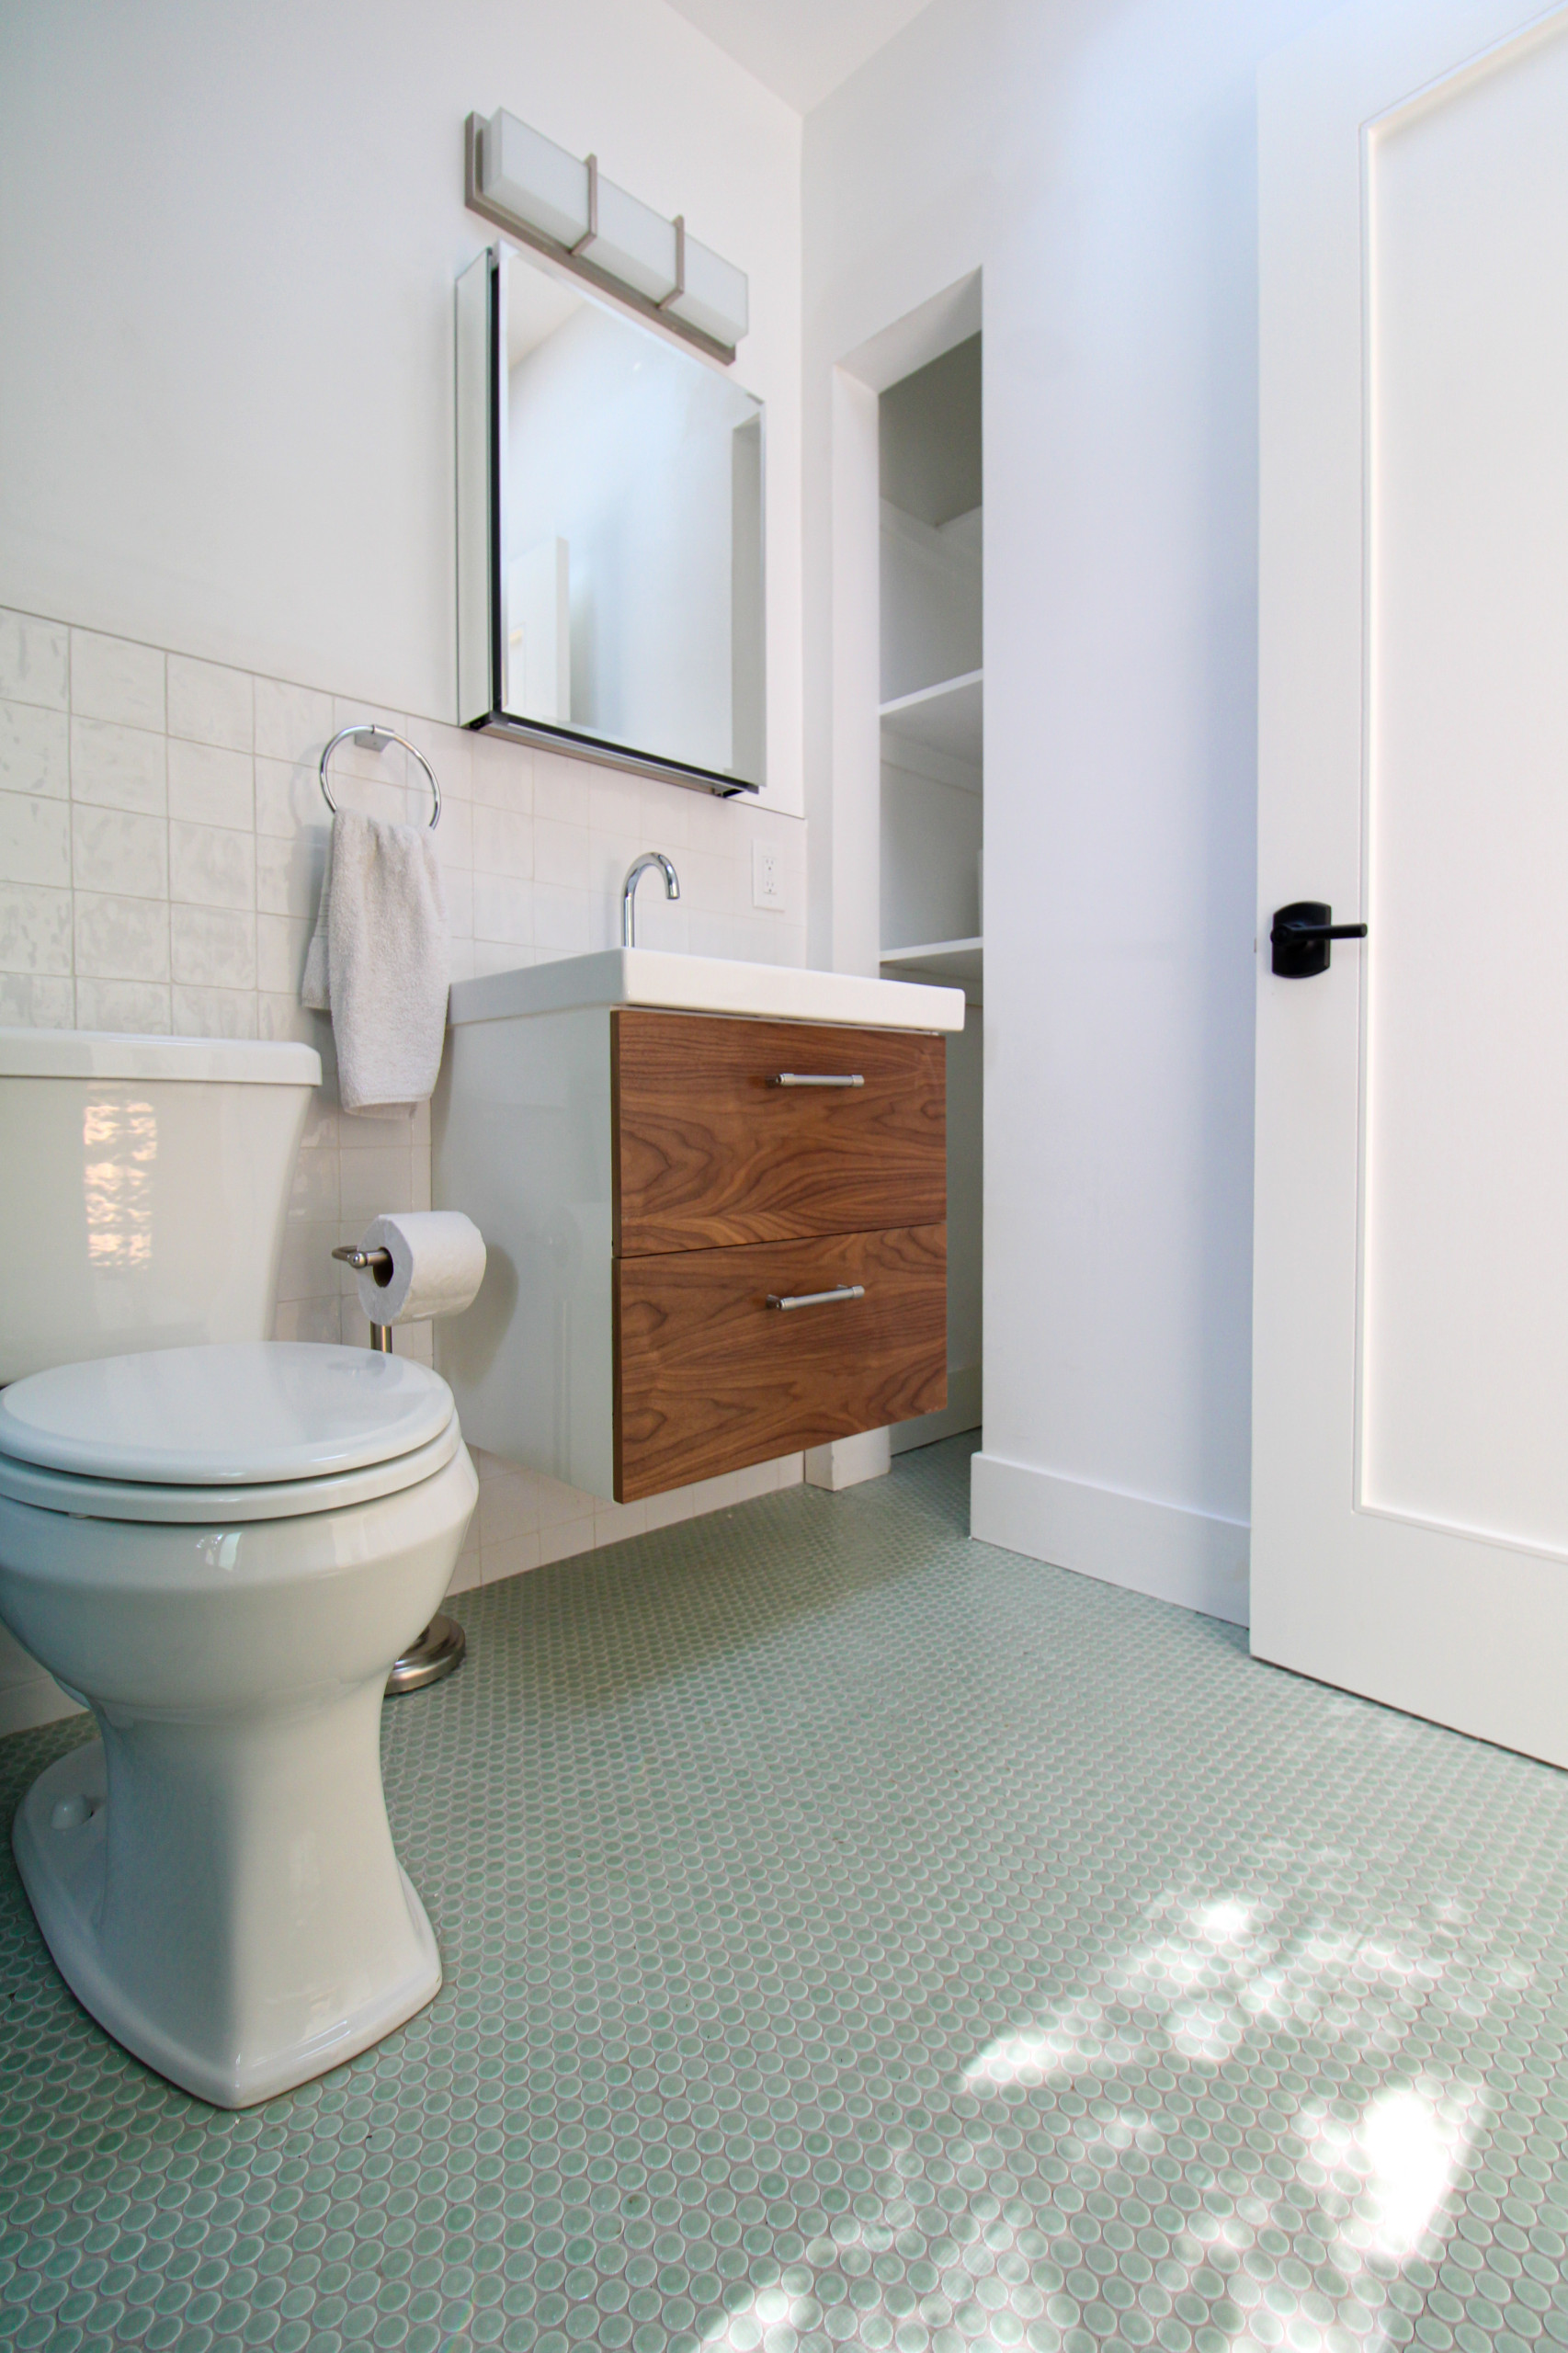 Eagle Rock, CA / Complete Accessory Dwelling Unit Build / Bathroom